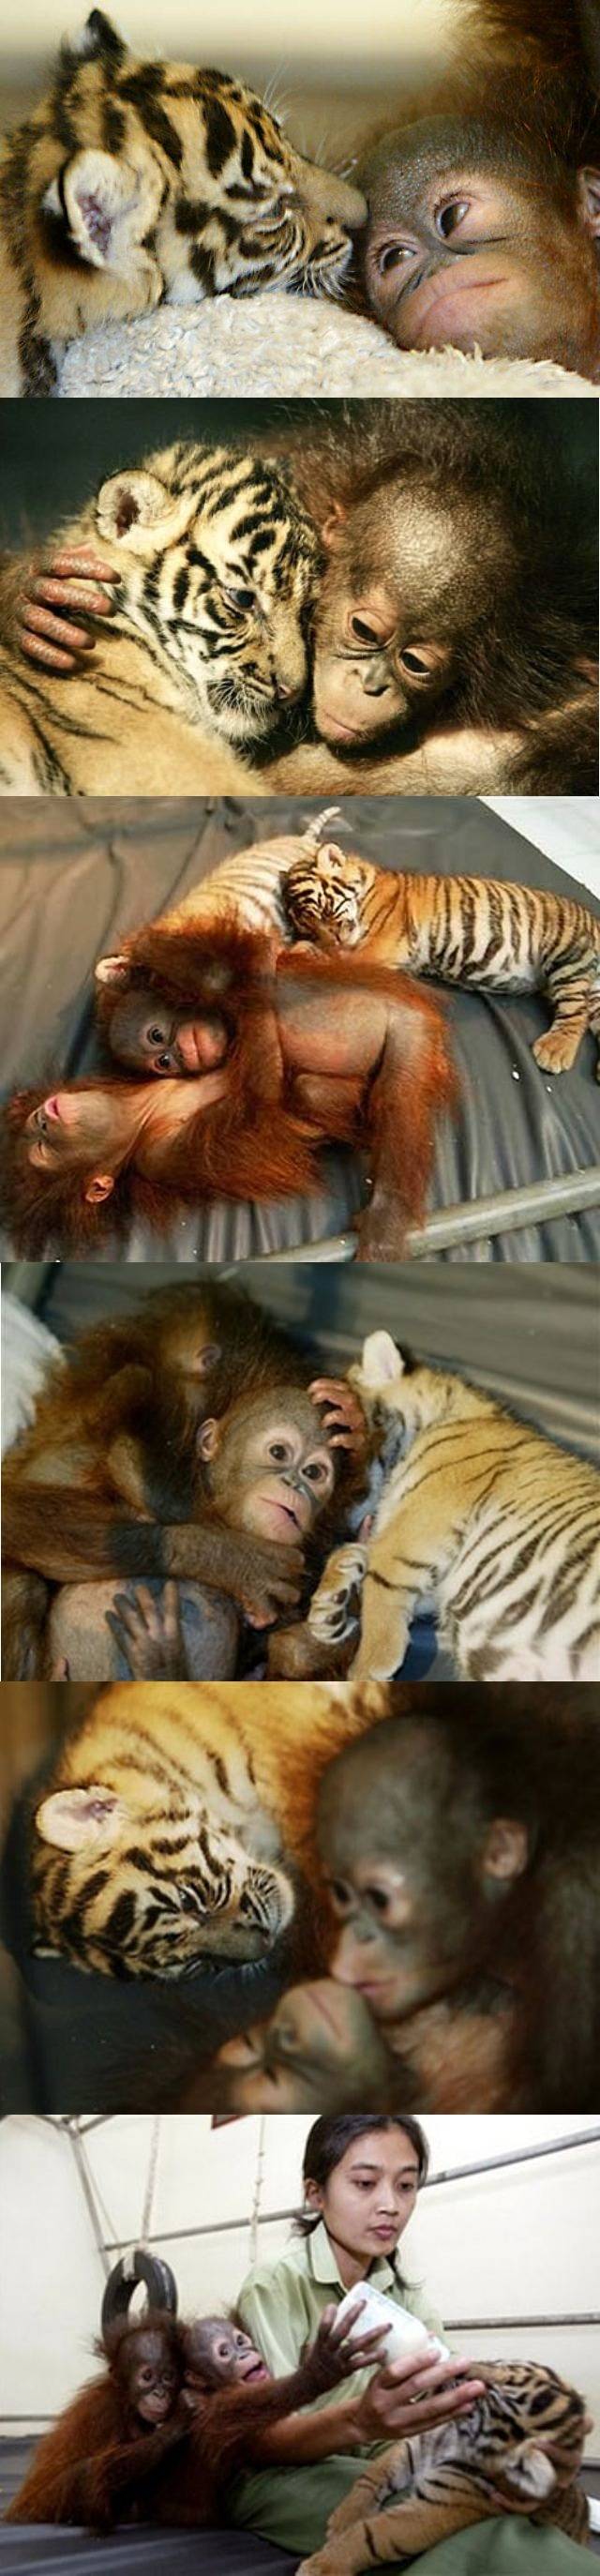 Orangutan Helps Hand Raise Tiger Cubs